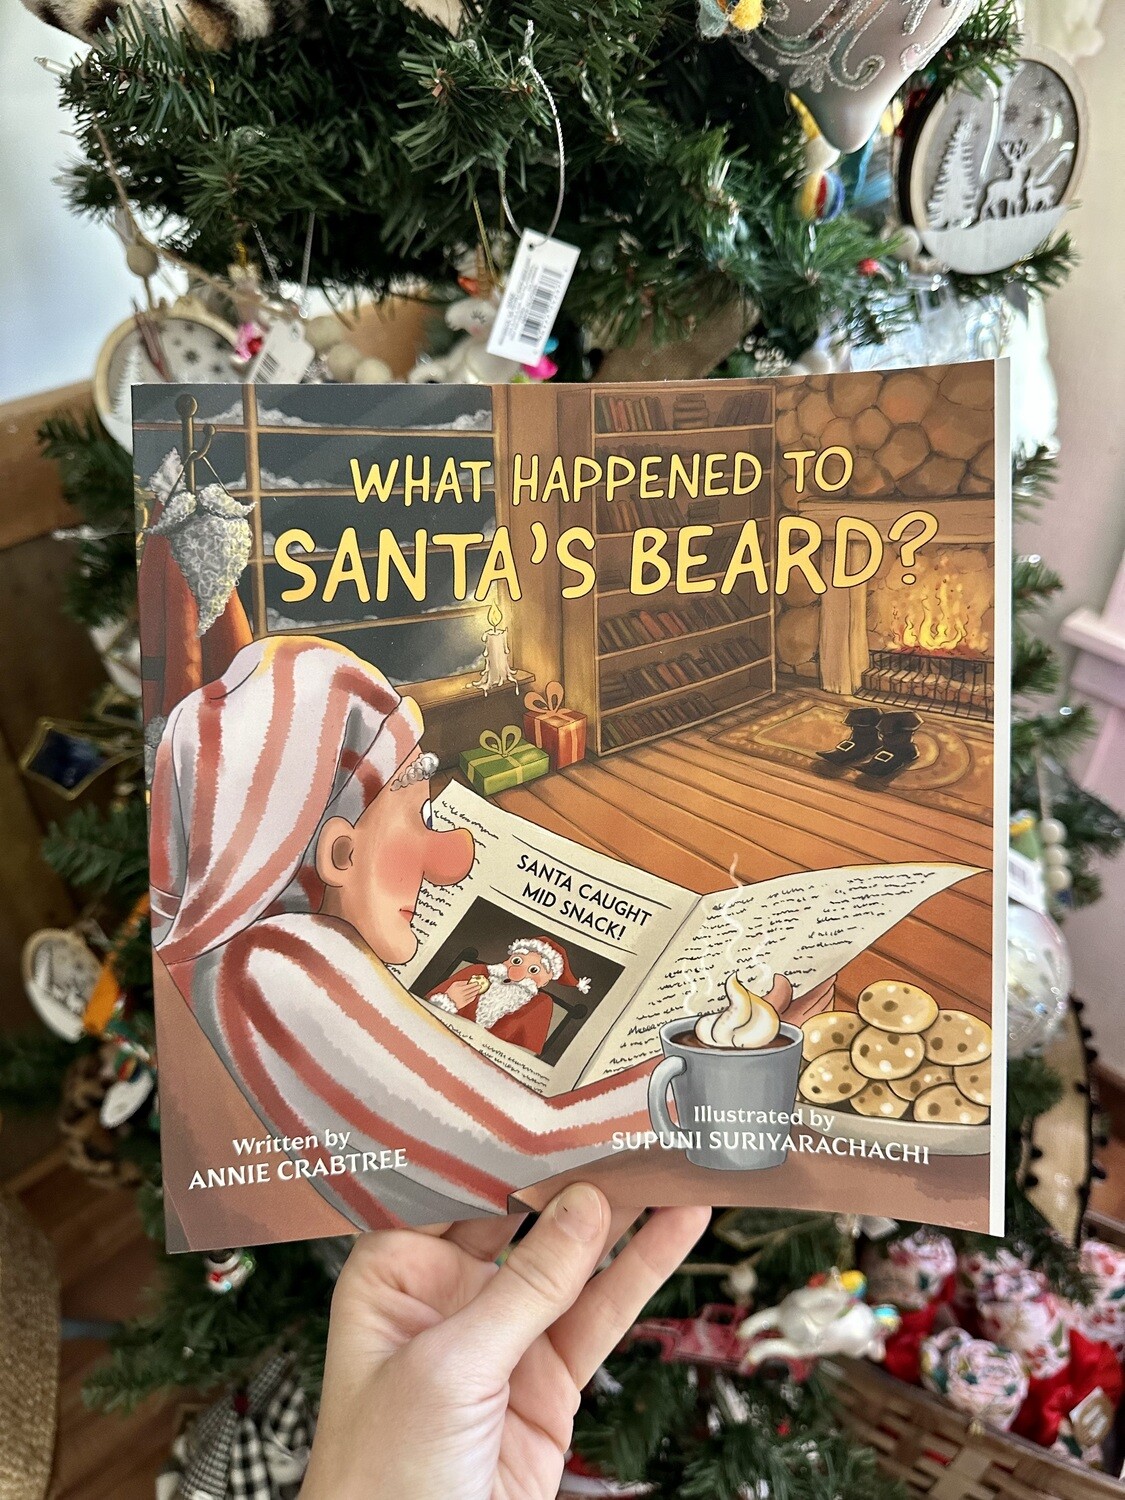  What happened to Santa's beard? 